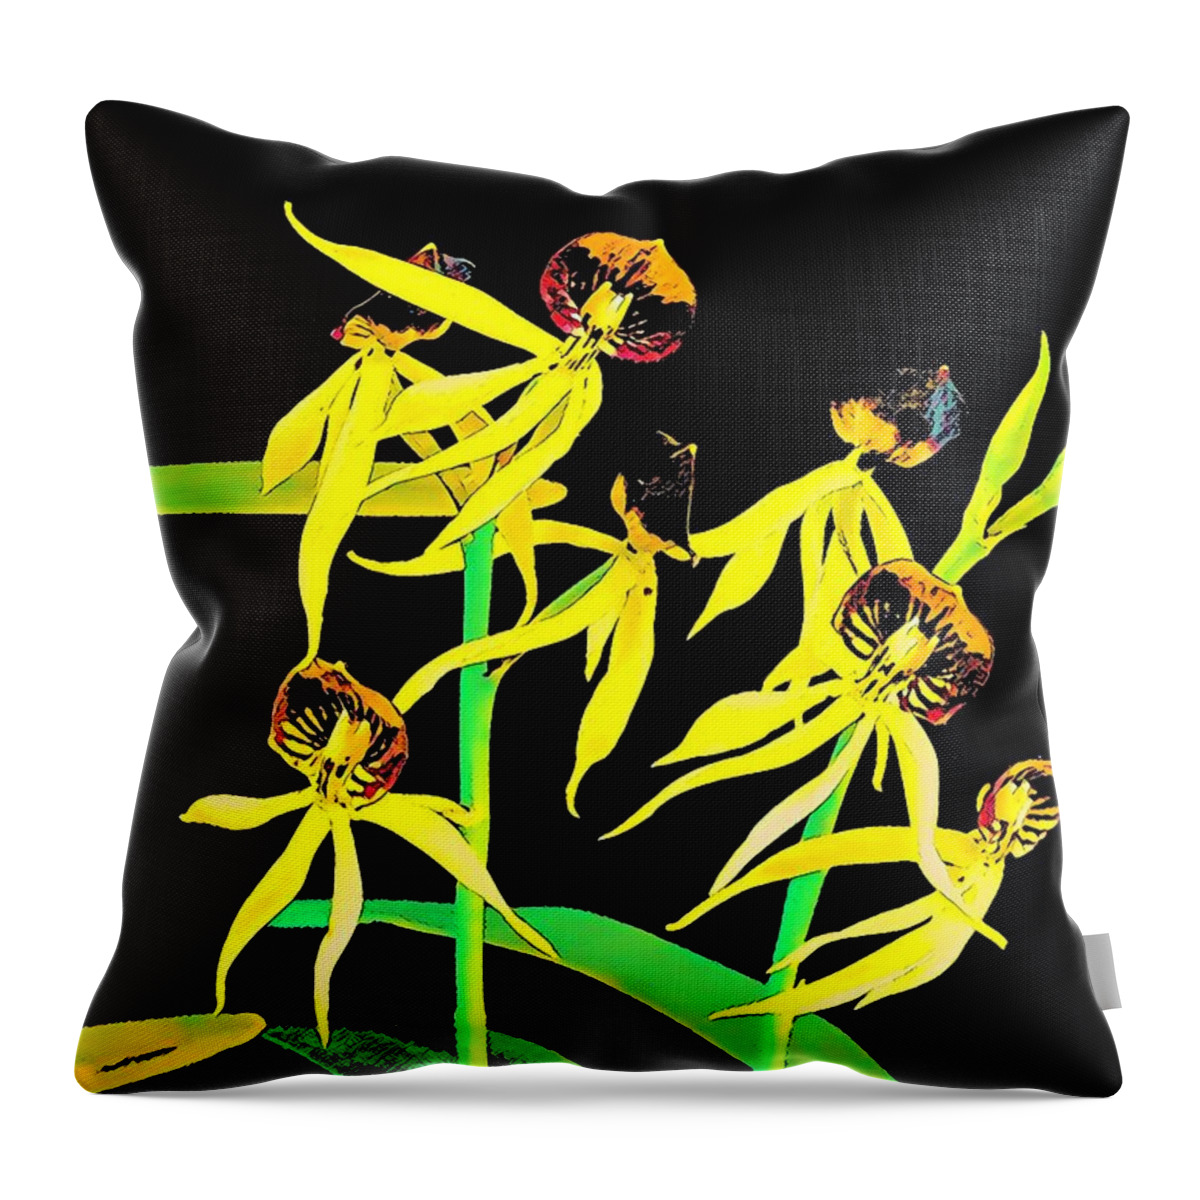 #flowersofaloha #flowers # Flowerpower #aloha #hawaii #aloha #puna #pahoa #thebigisland #dancingorchidsyellow Throw Pillow featuring the photograph Dancing Orchids Yellow by Joalene Young